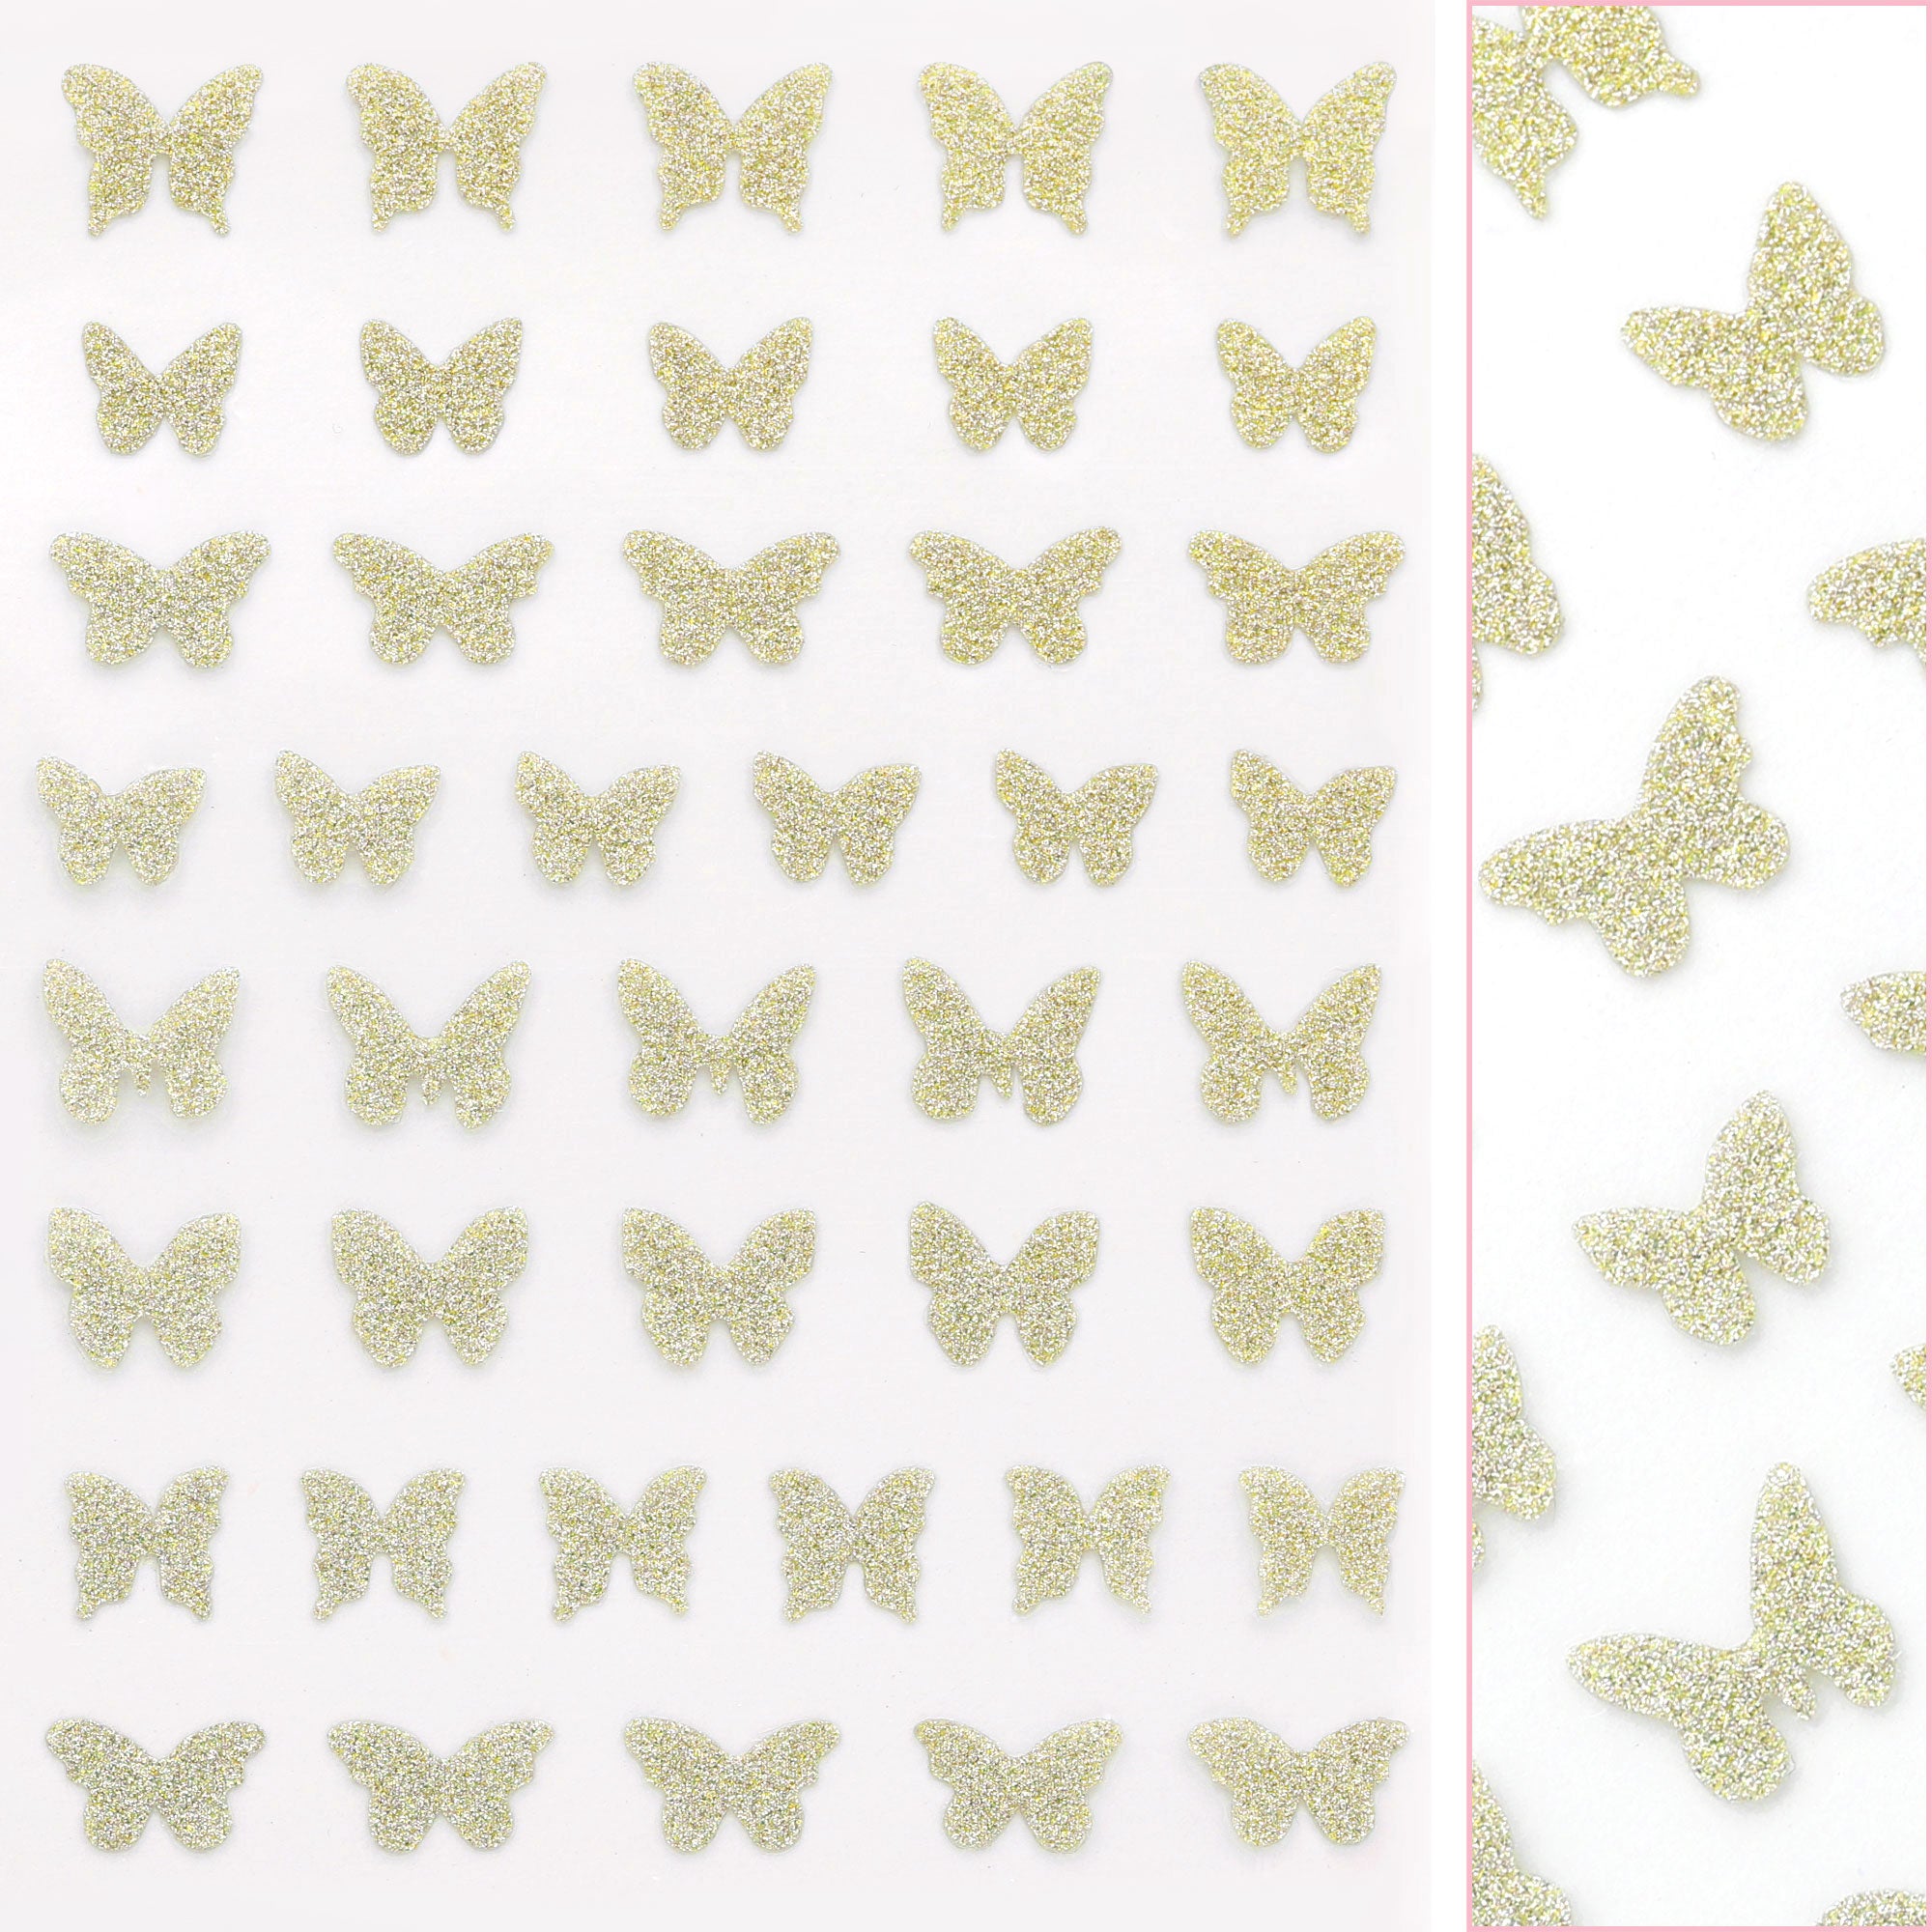 Twinkle Flash Glitter Nail Art Sticker / Butterfly / Blue Gold Silver Rose Gold